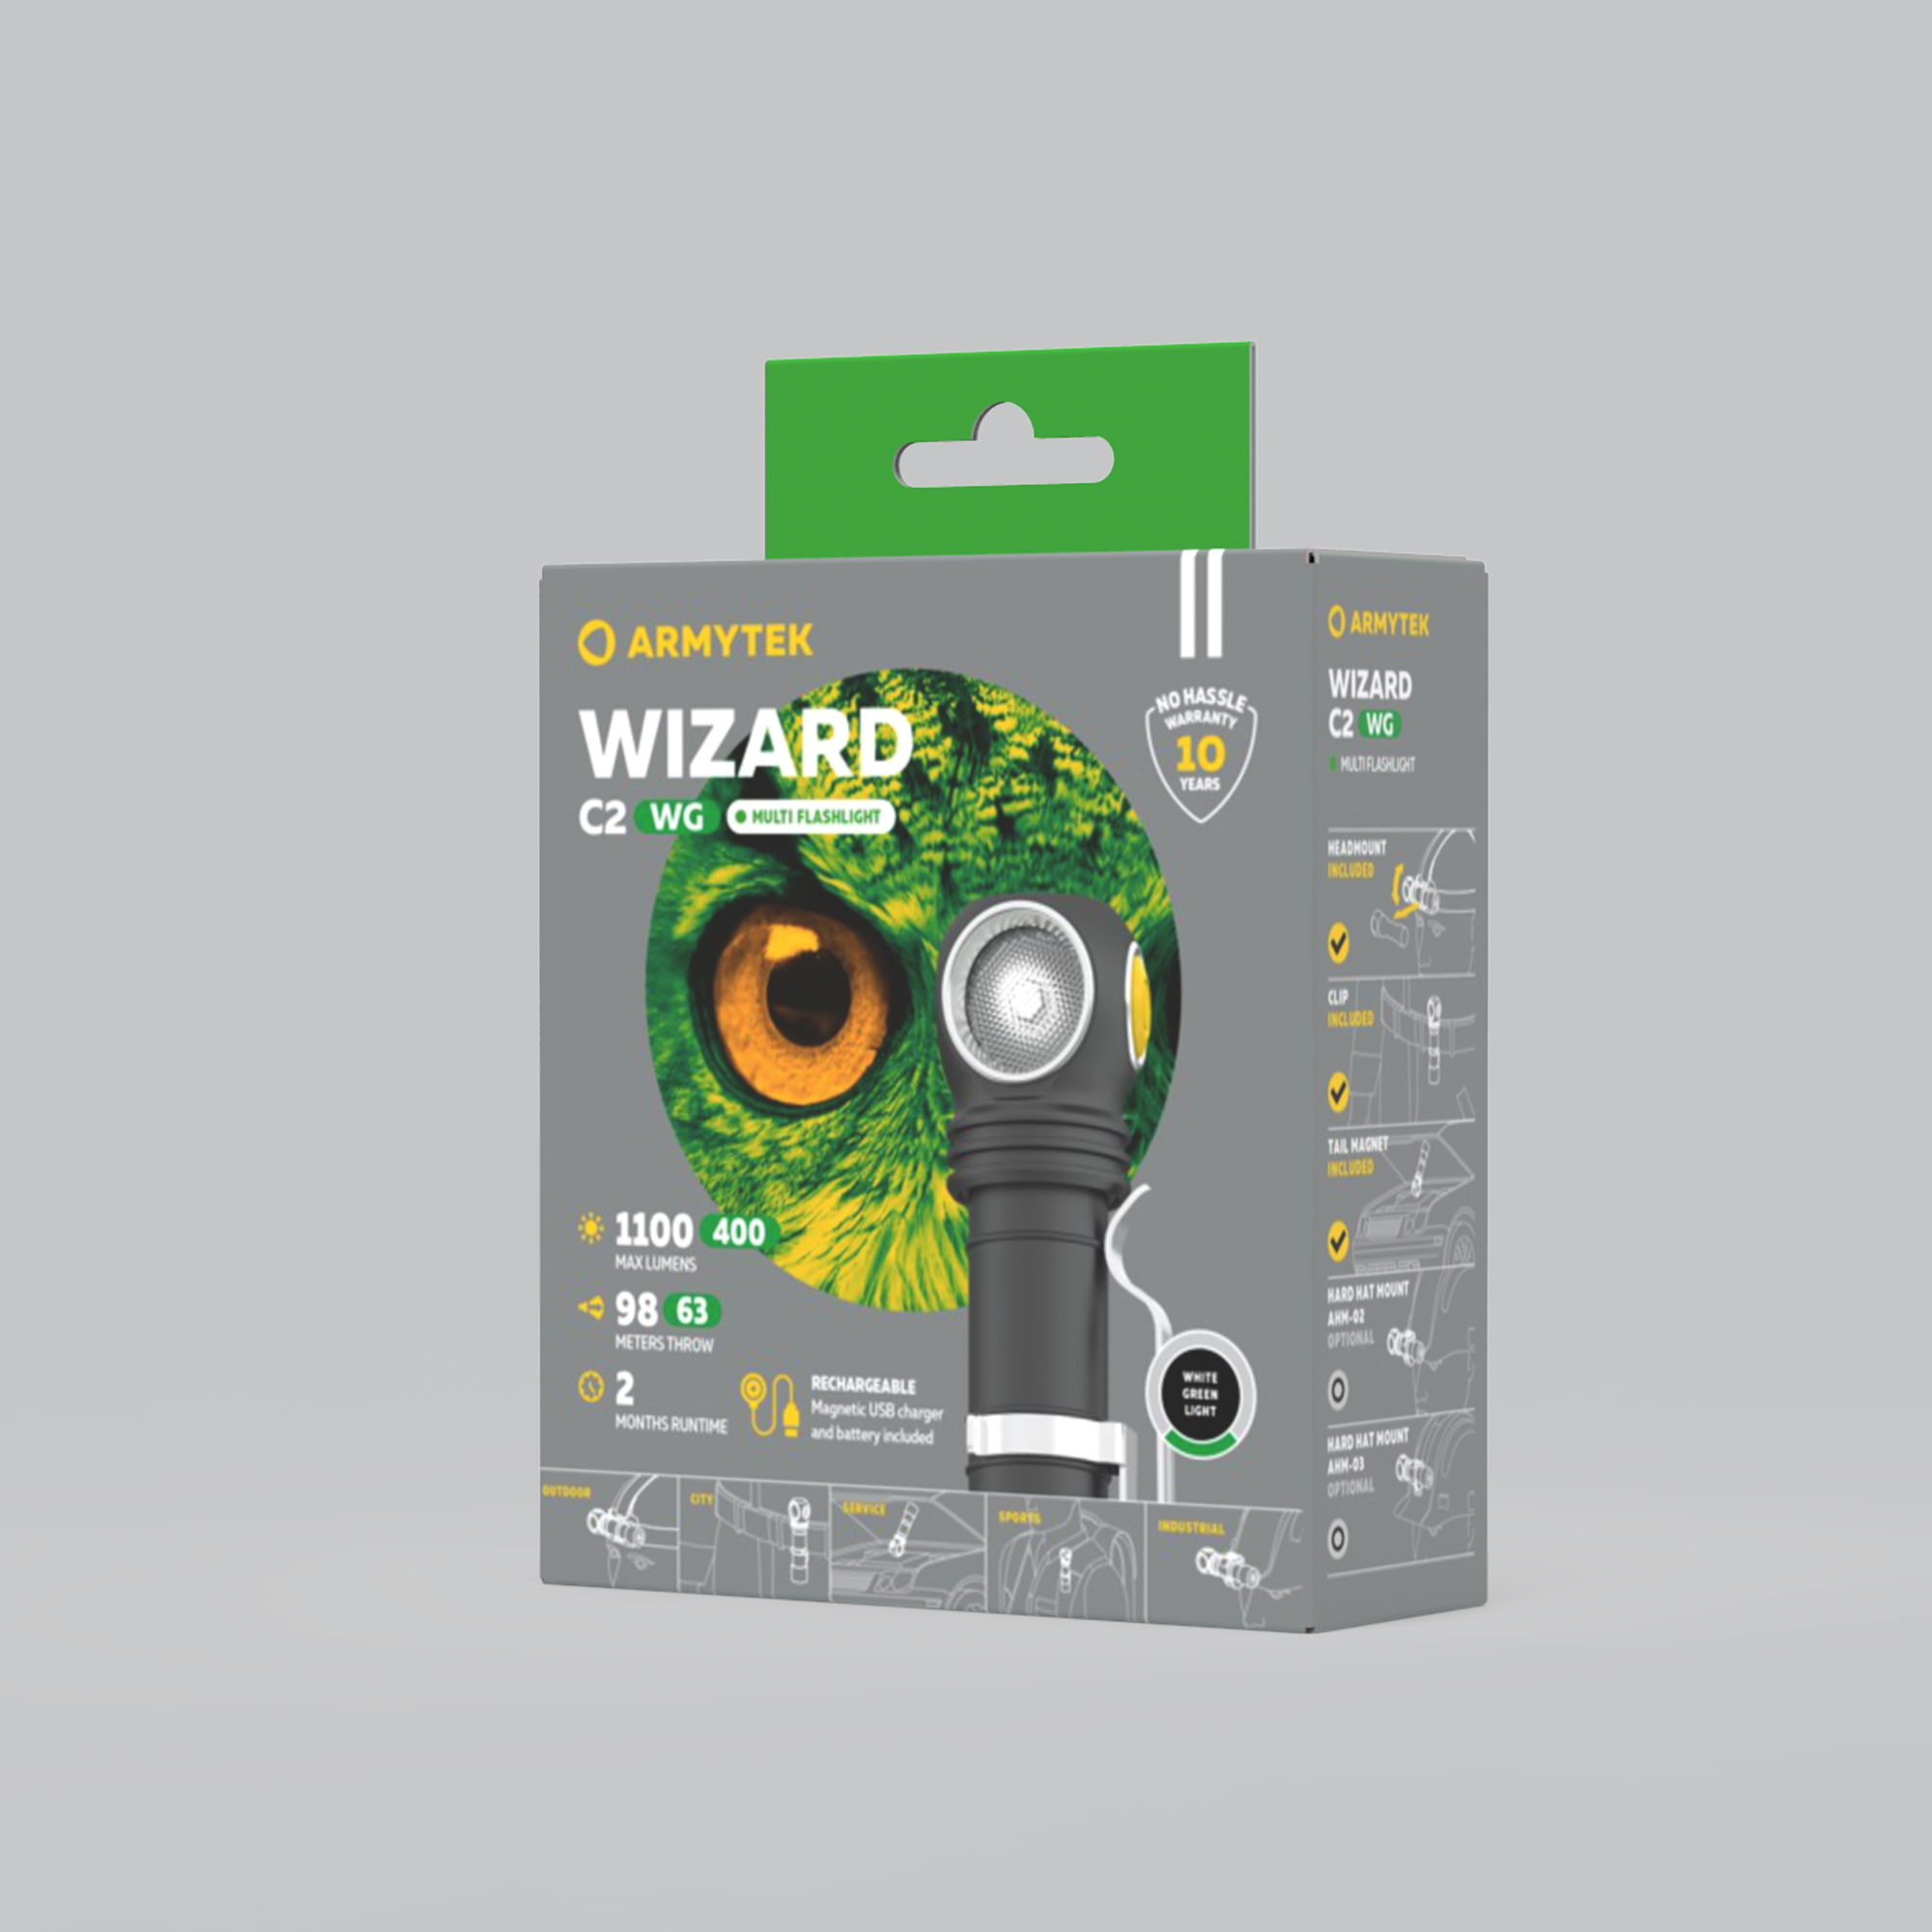 Armytek® Wizard C2 WG Magnet USB